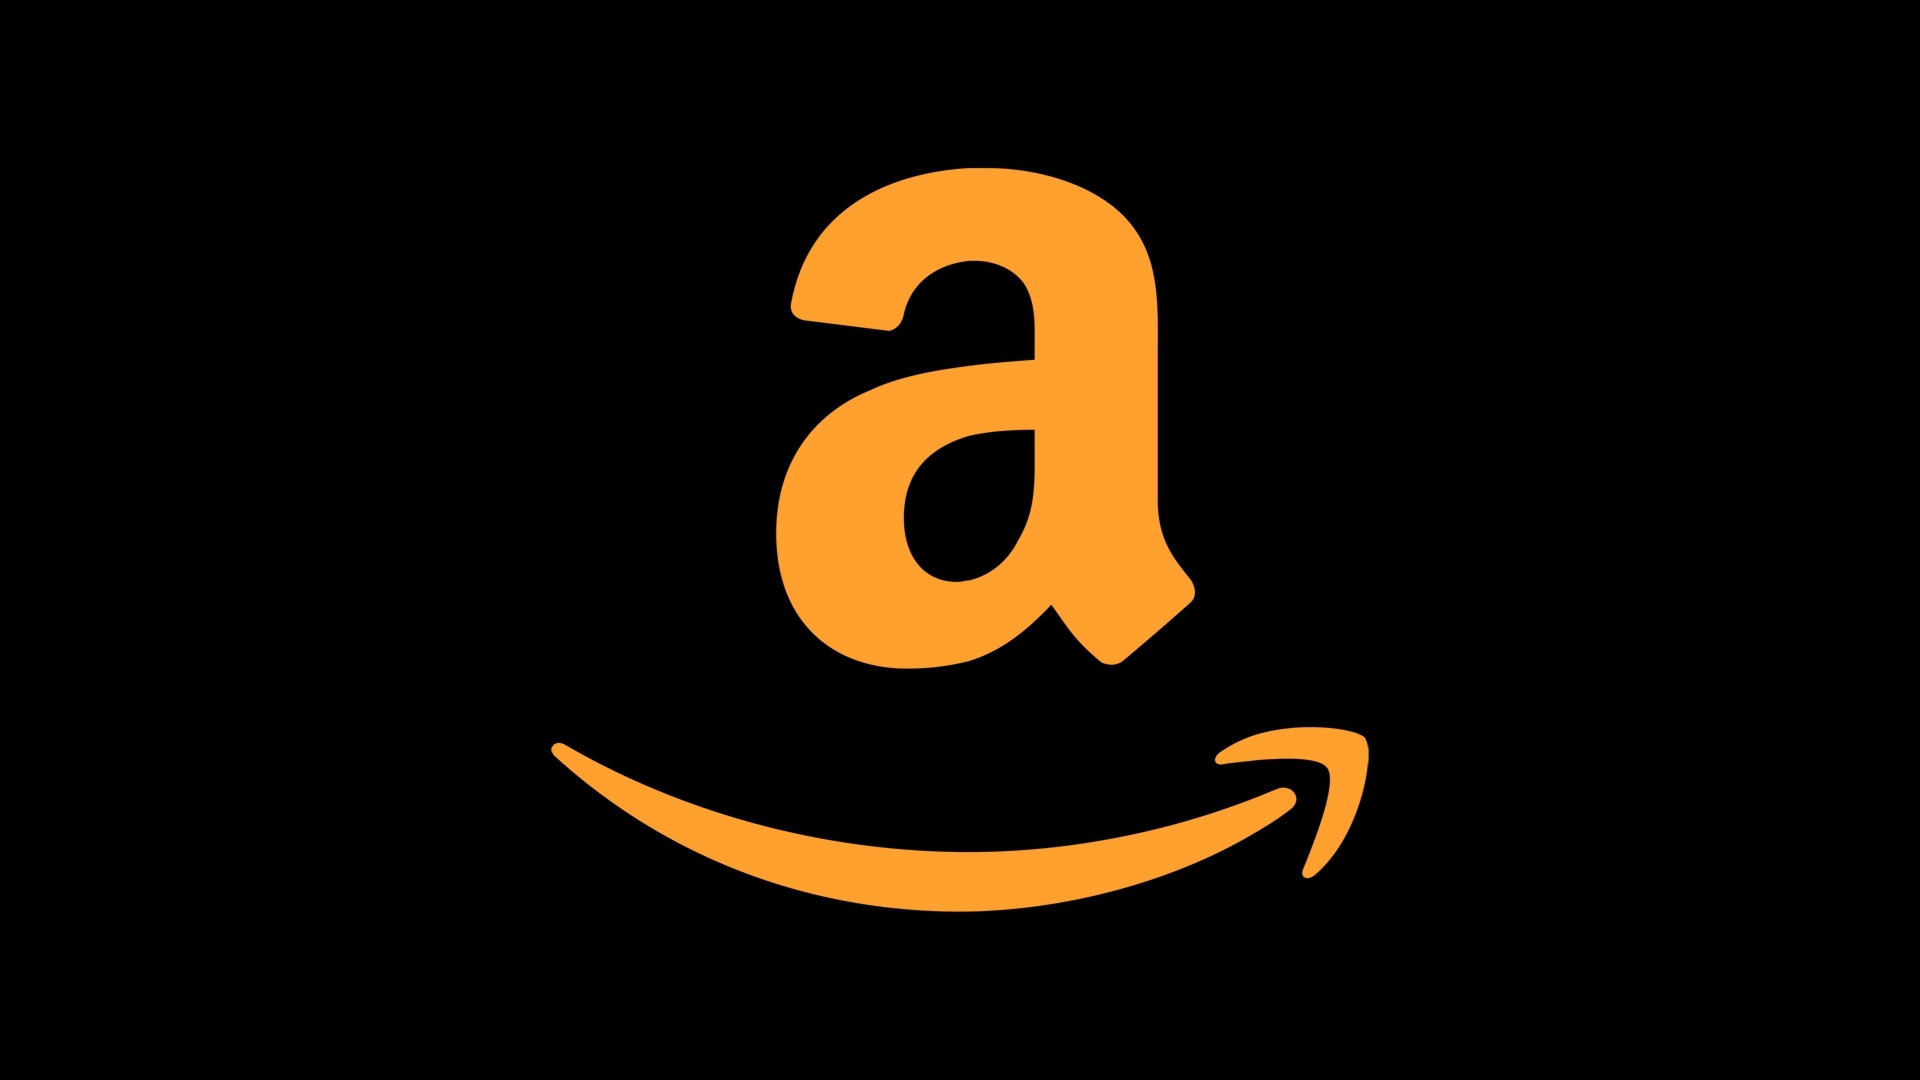 Amazon 4k Logo Wallpaper In 1920x1080 Resolution